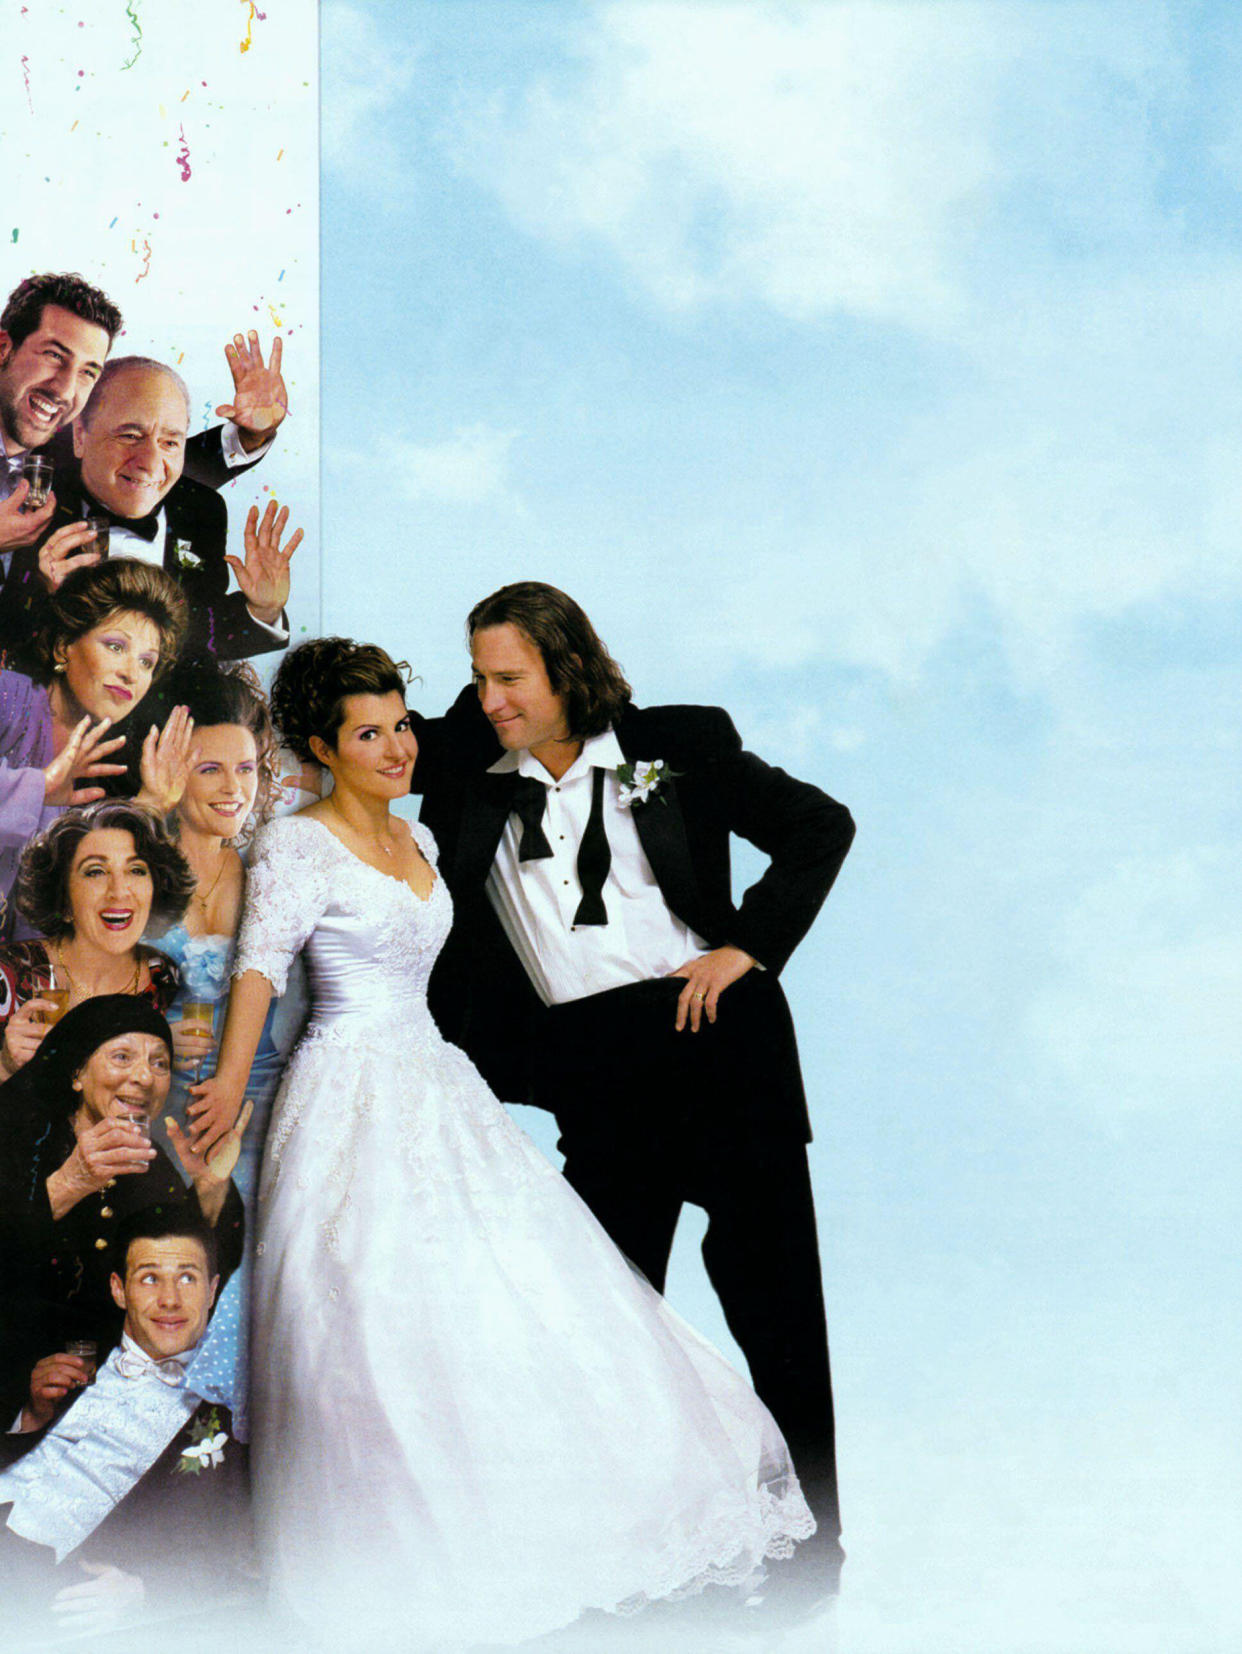 NIA VARDALOS, JOHN CORBETT, MY BIG FAT GREEK WEDDING, 2002 (Cinematic Collection  / Alamy Stock Photo)